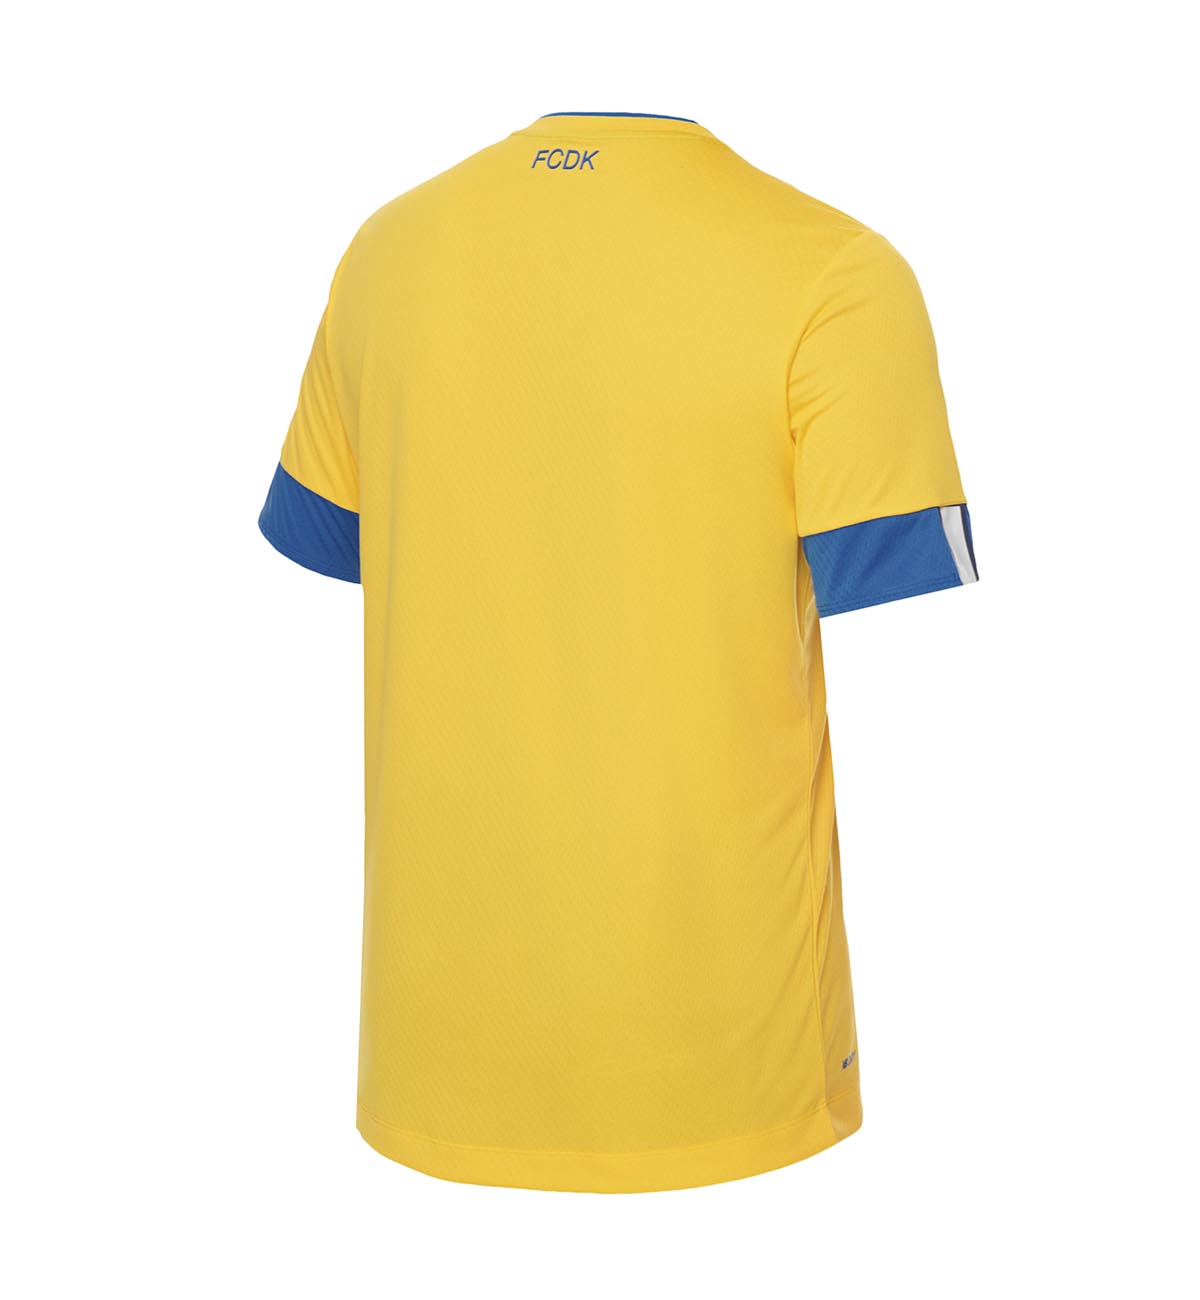 FCDK yellow playing T-shirt 3rd